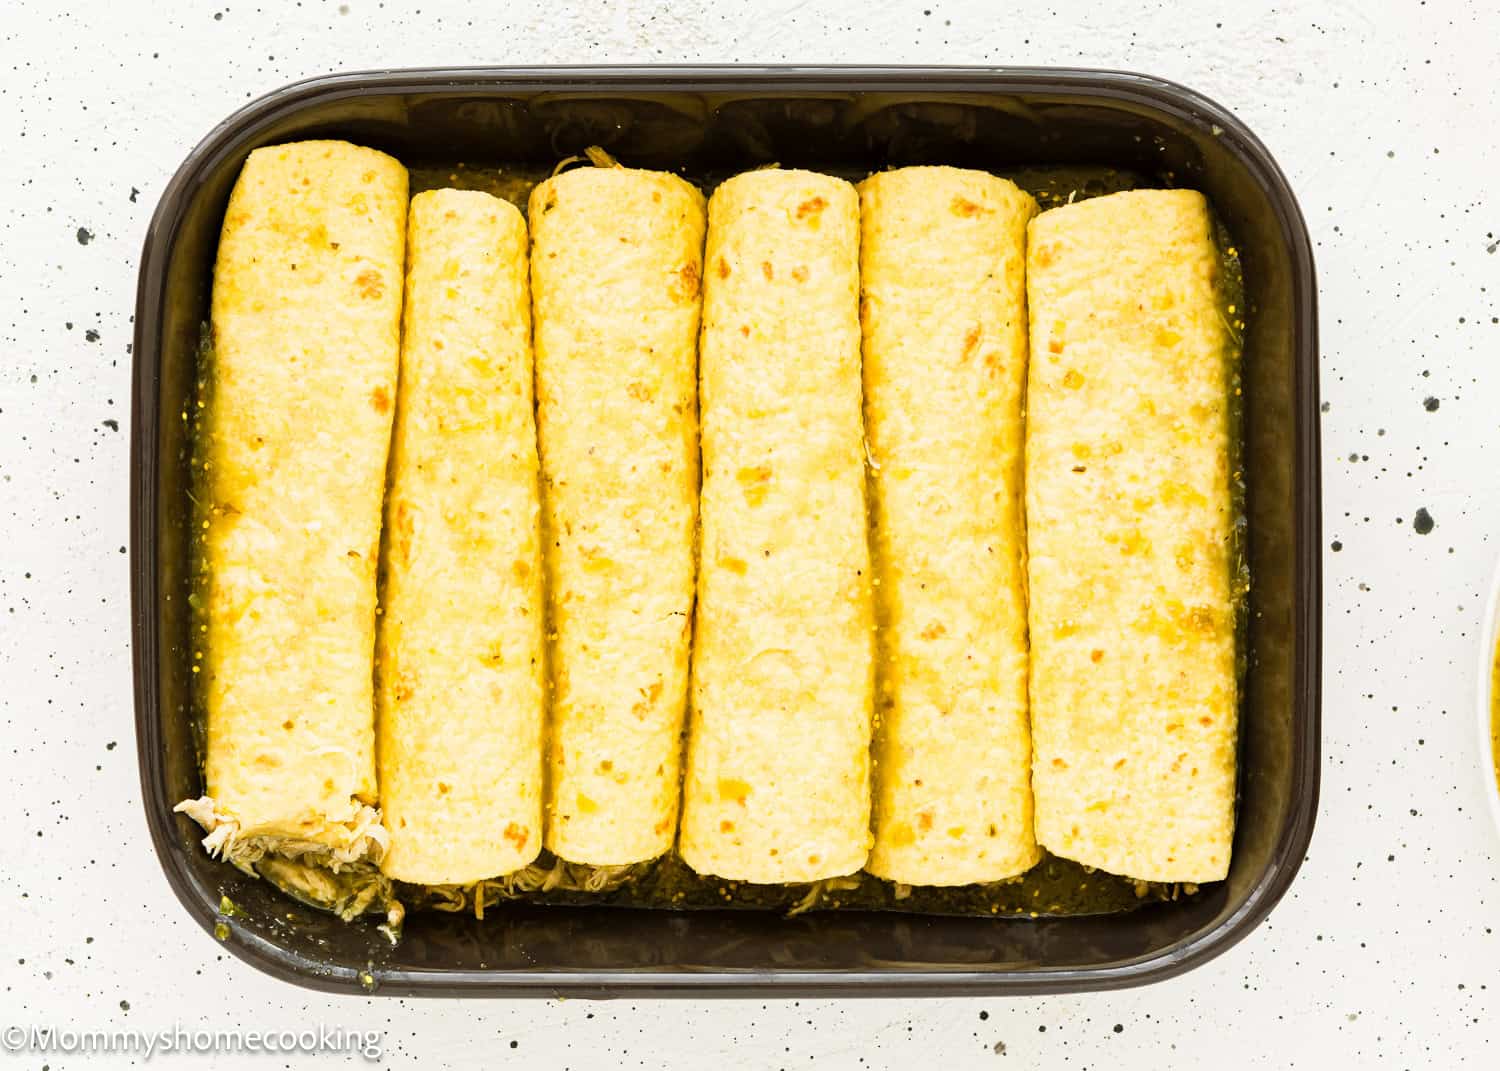 unbaked Enchiladas Suizas in a casserole dish.